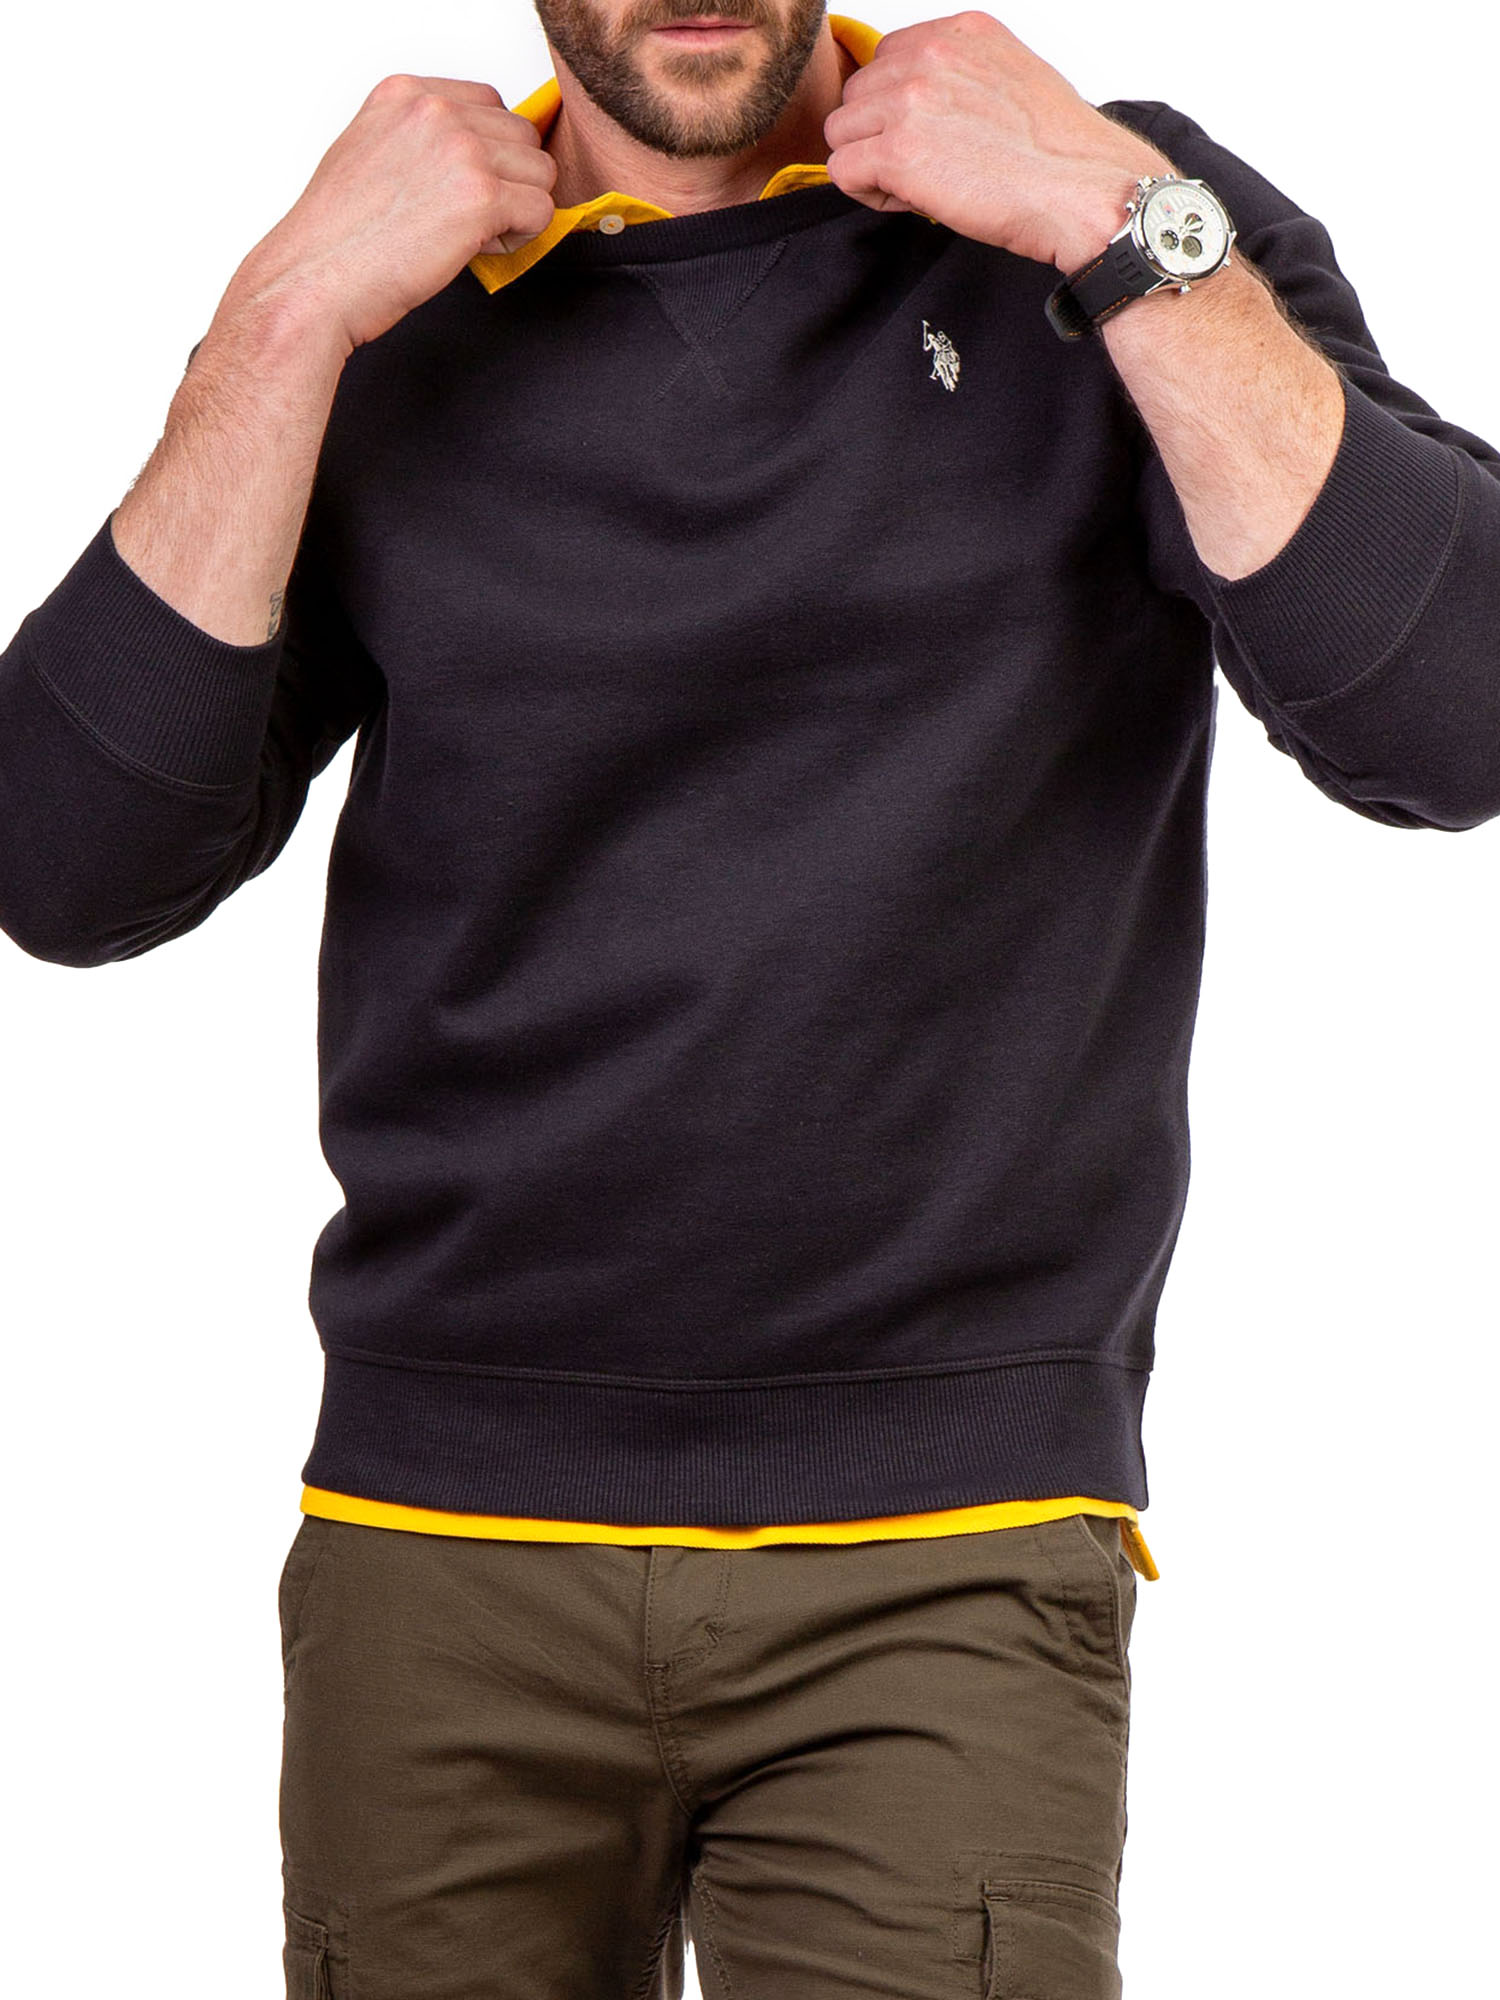 U.S. Polo Assn. Men's Knit Sweater Shirt - image 2 of 5